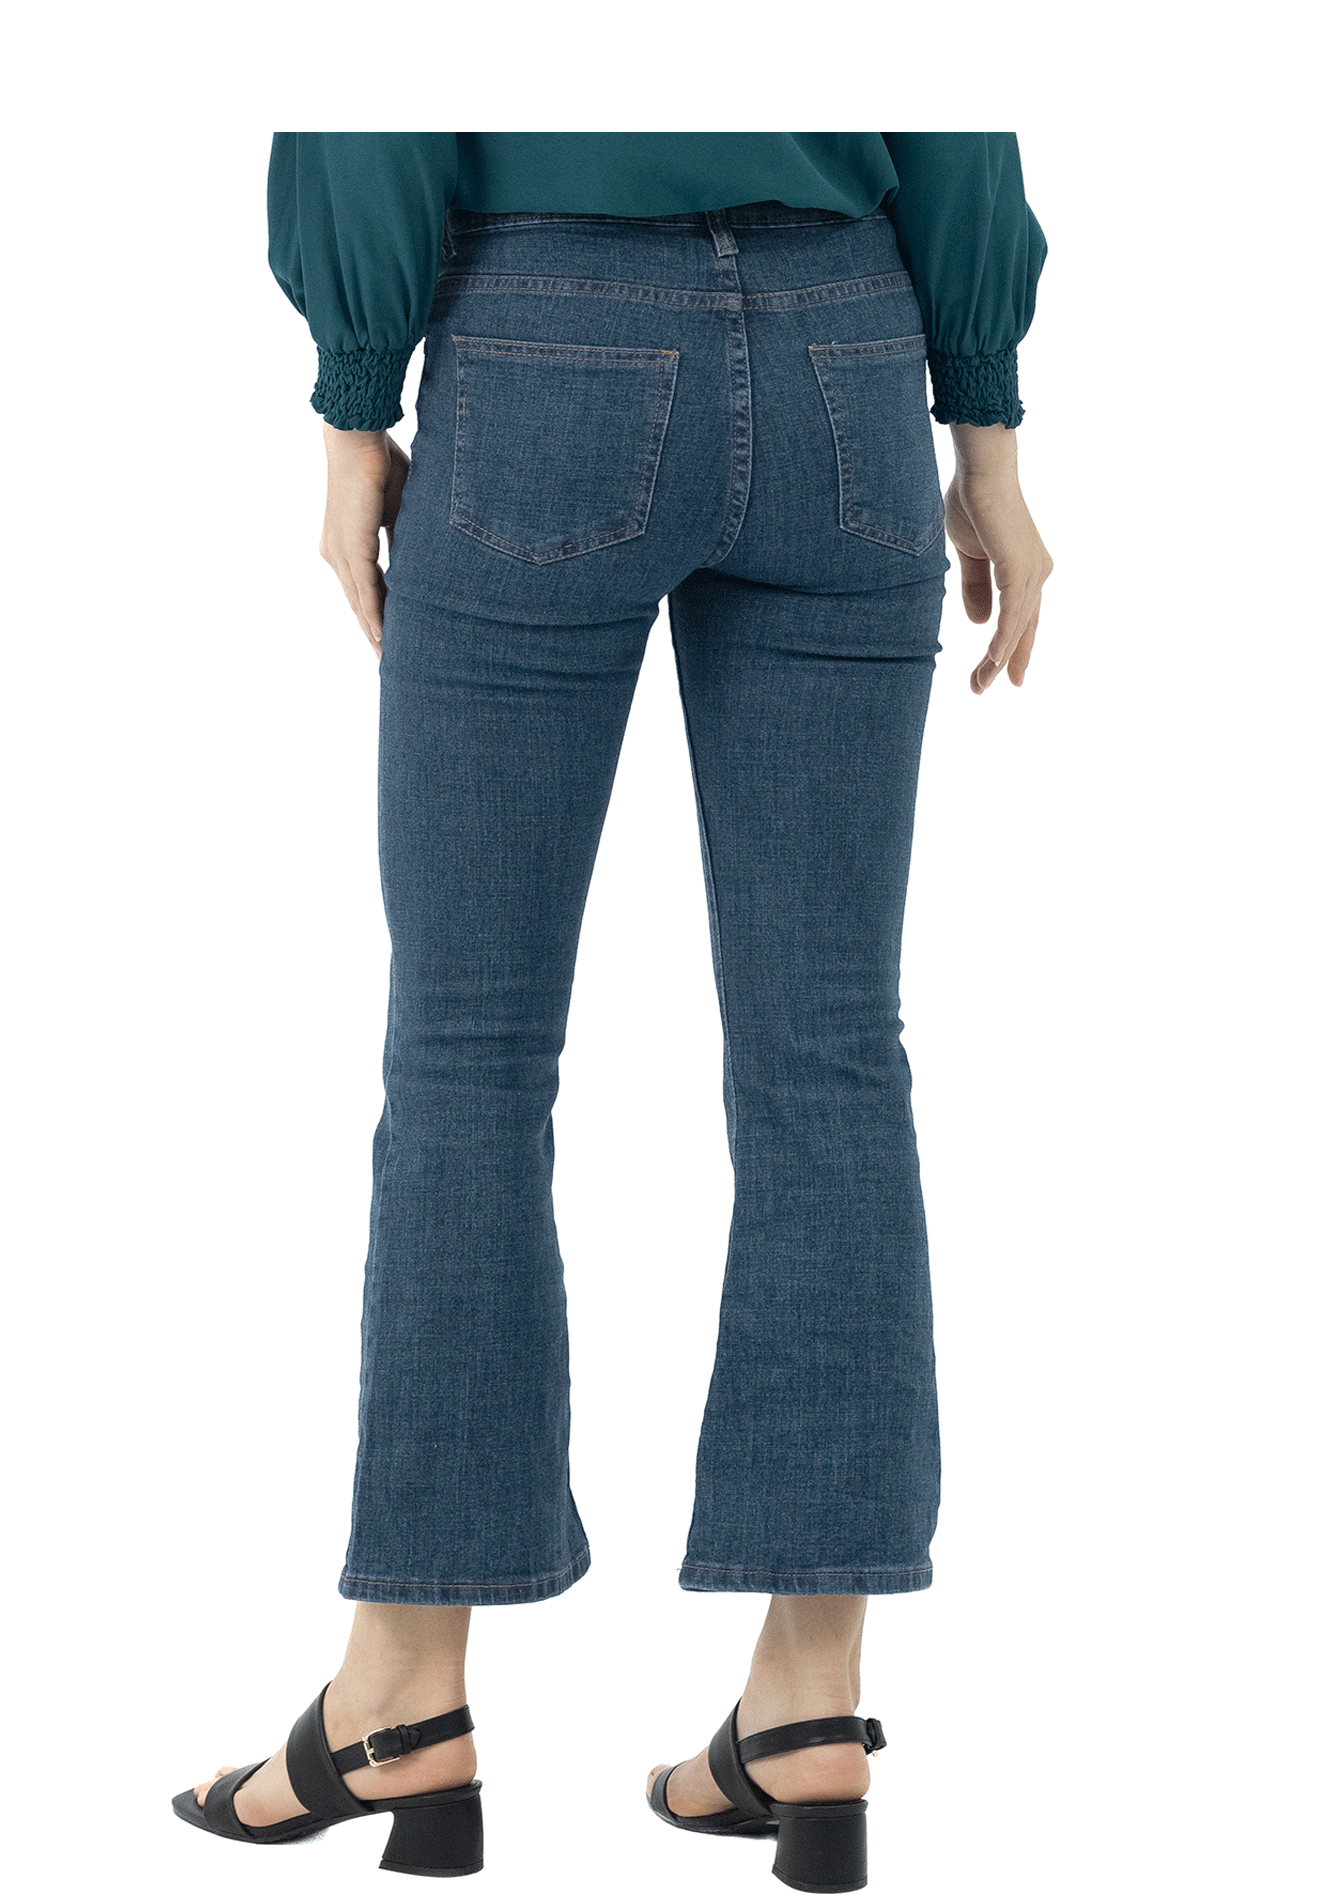 DAISY By VOIR High Waisted Bootcut Jeans